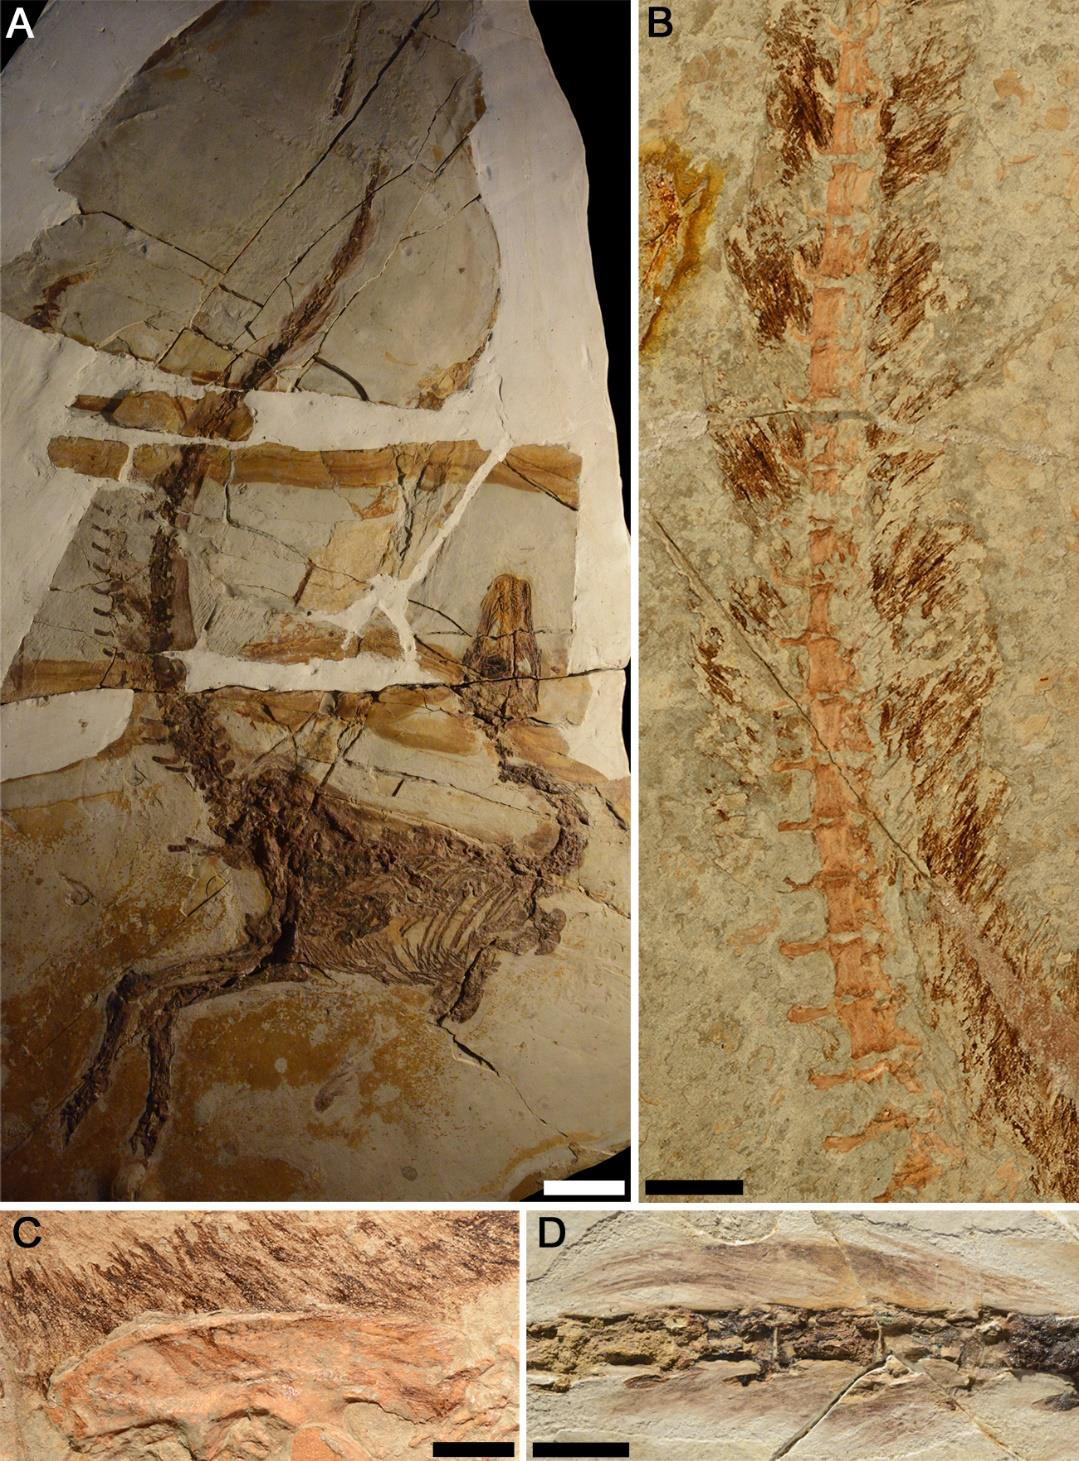 https://upload.wikimedia.org/wikipedia/commons/a/a7/Sinosauropteryx_plumage_fossils.jpg